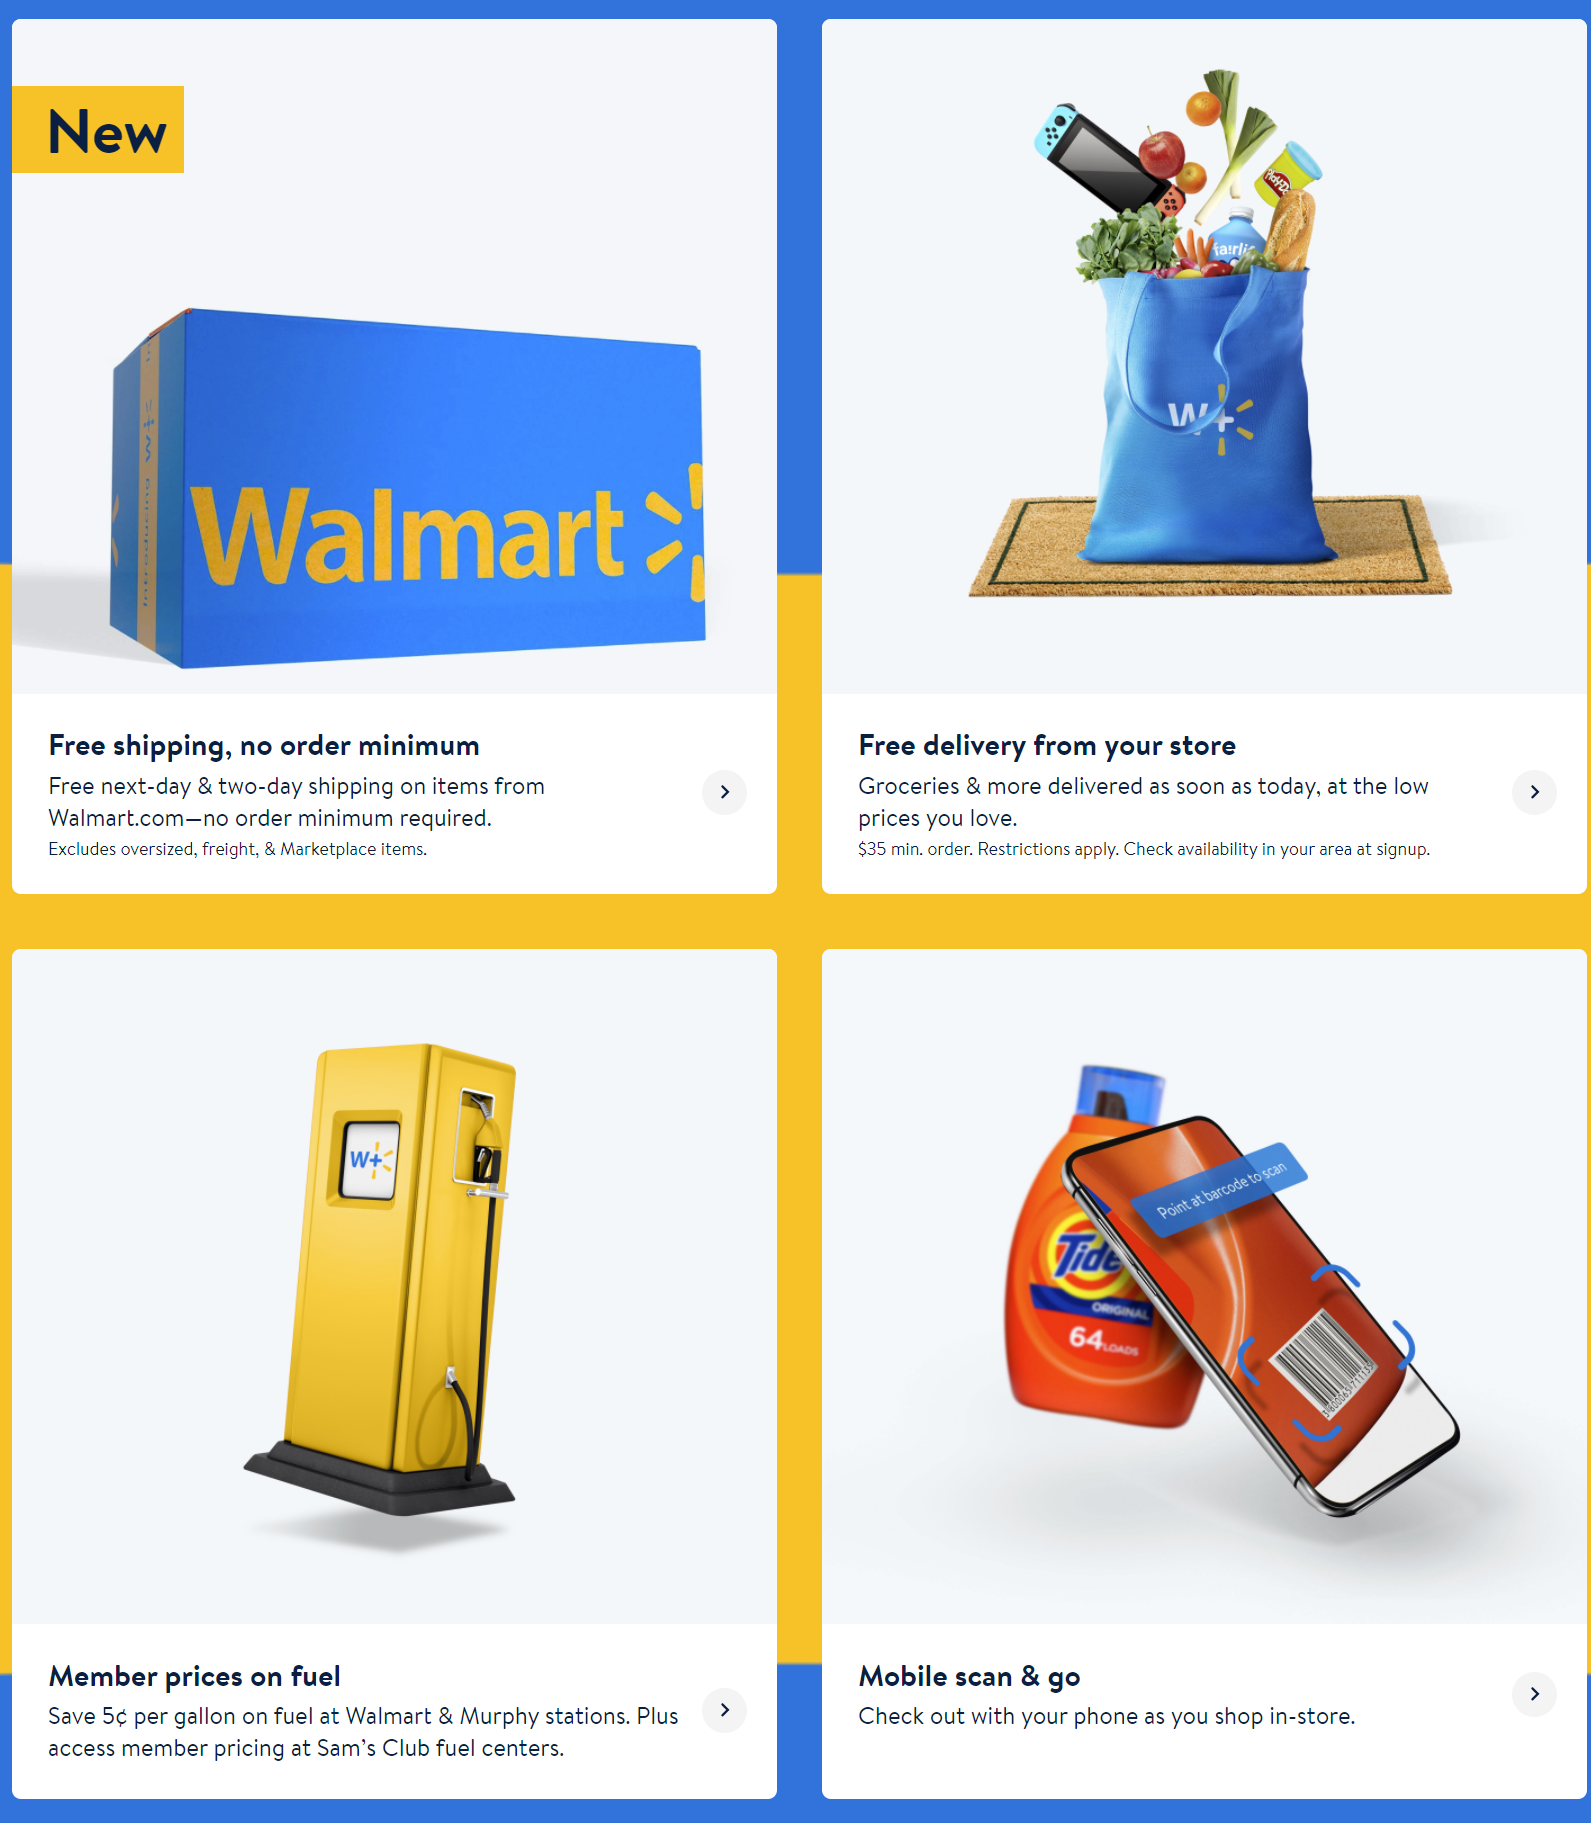 Walmart+ Membership